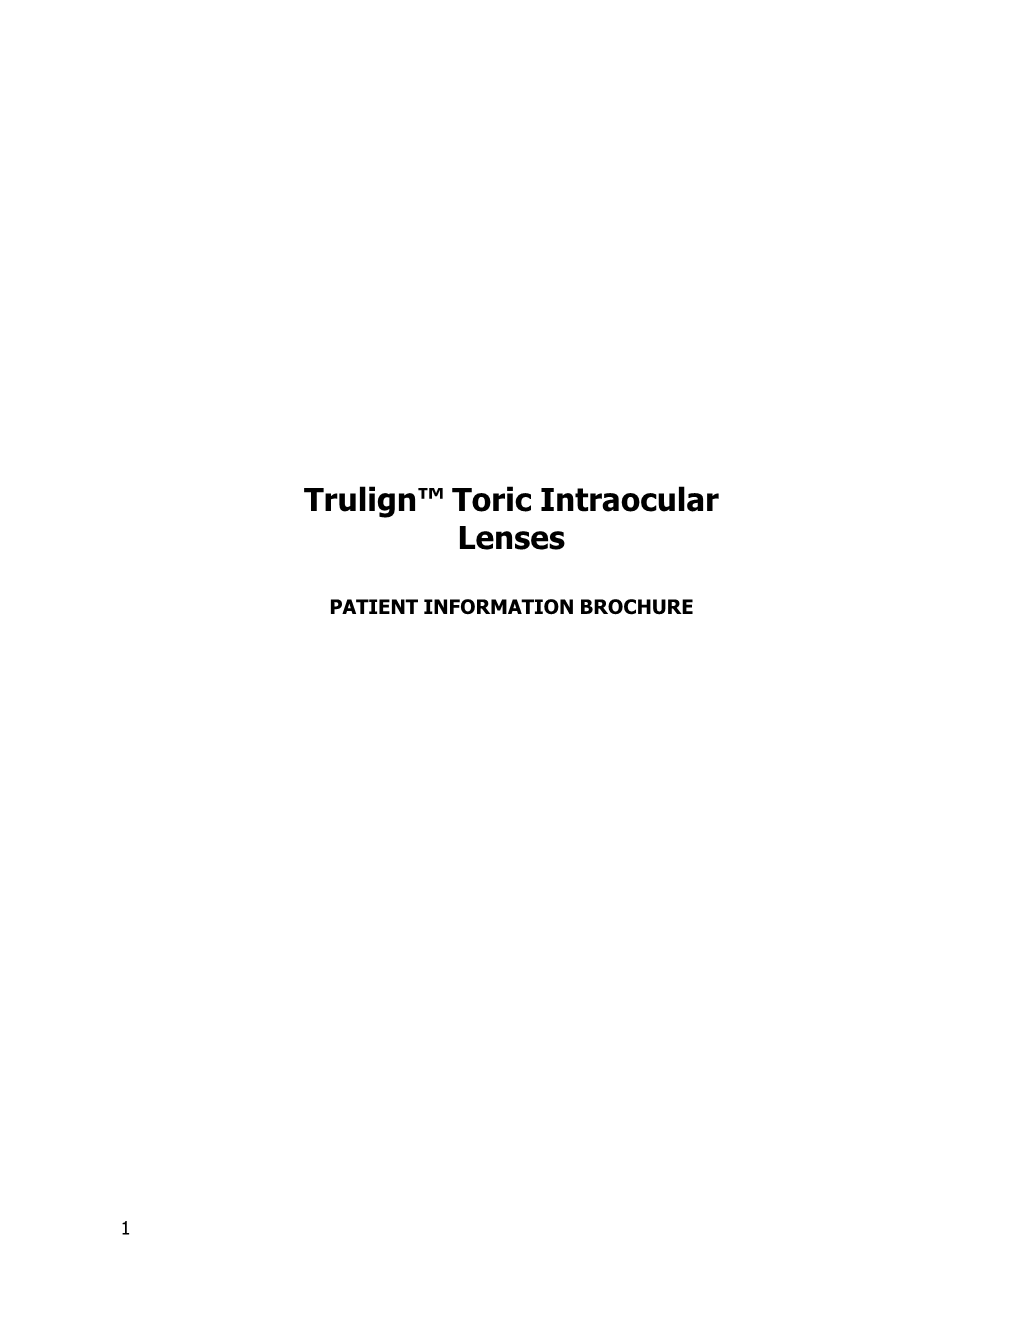 Trulign™ Toric Intraocular Lenses